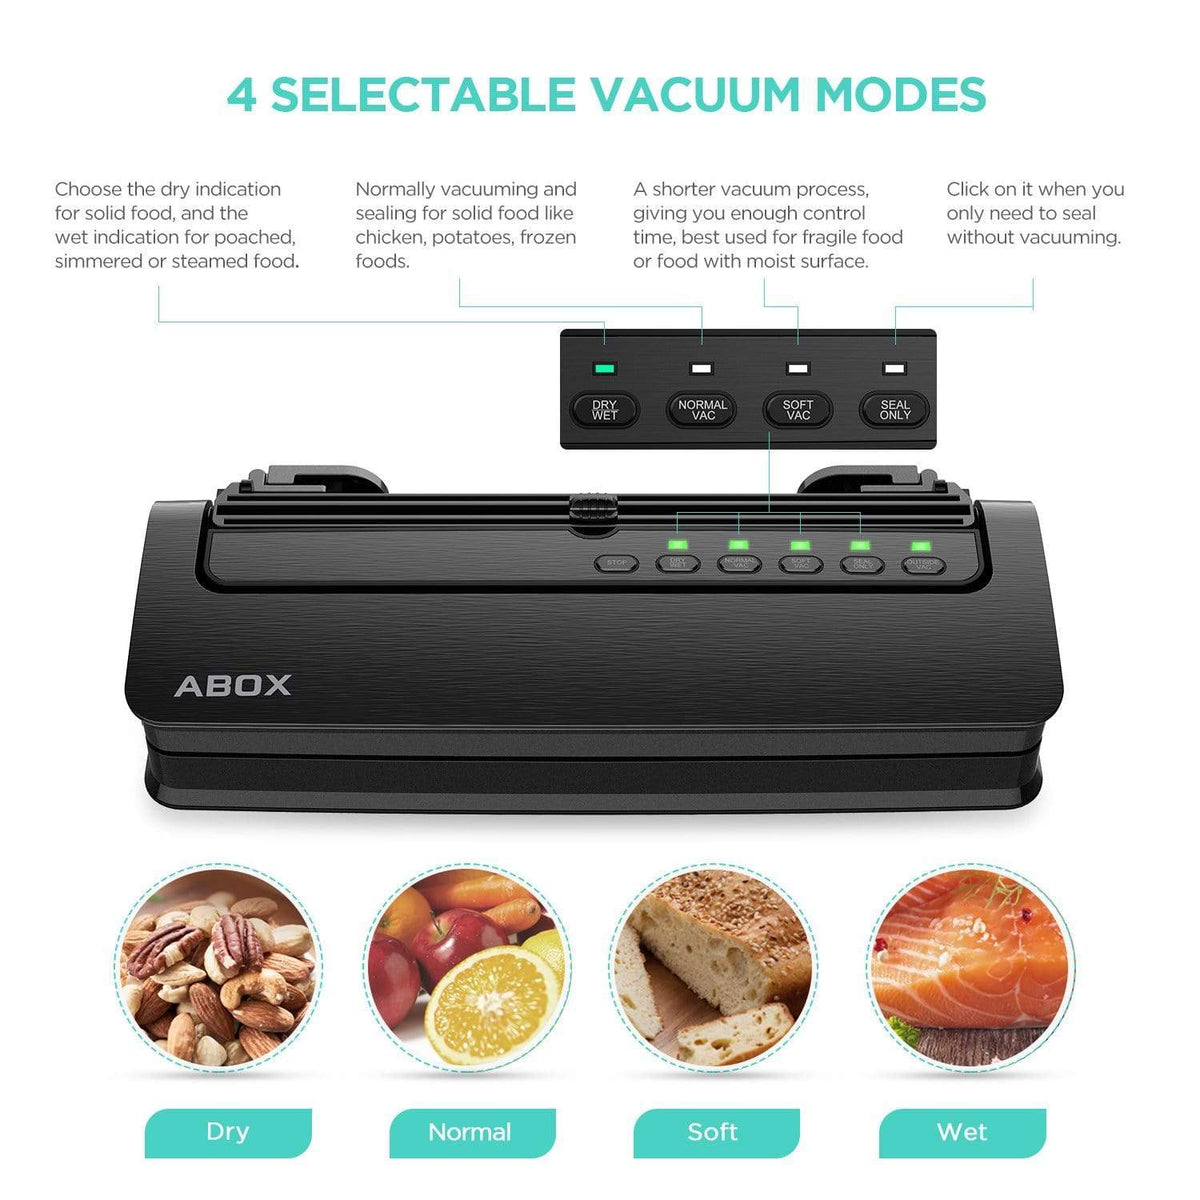 ABOX Home Appliance ABOX Vacuum Sealer Machine, 5 in 1 Food Vacuum Sealer, Built-in Cutter, Starter Kit Roll and Holder